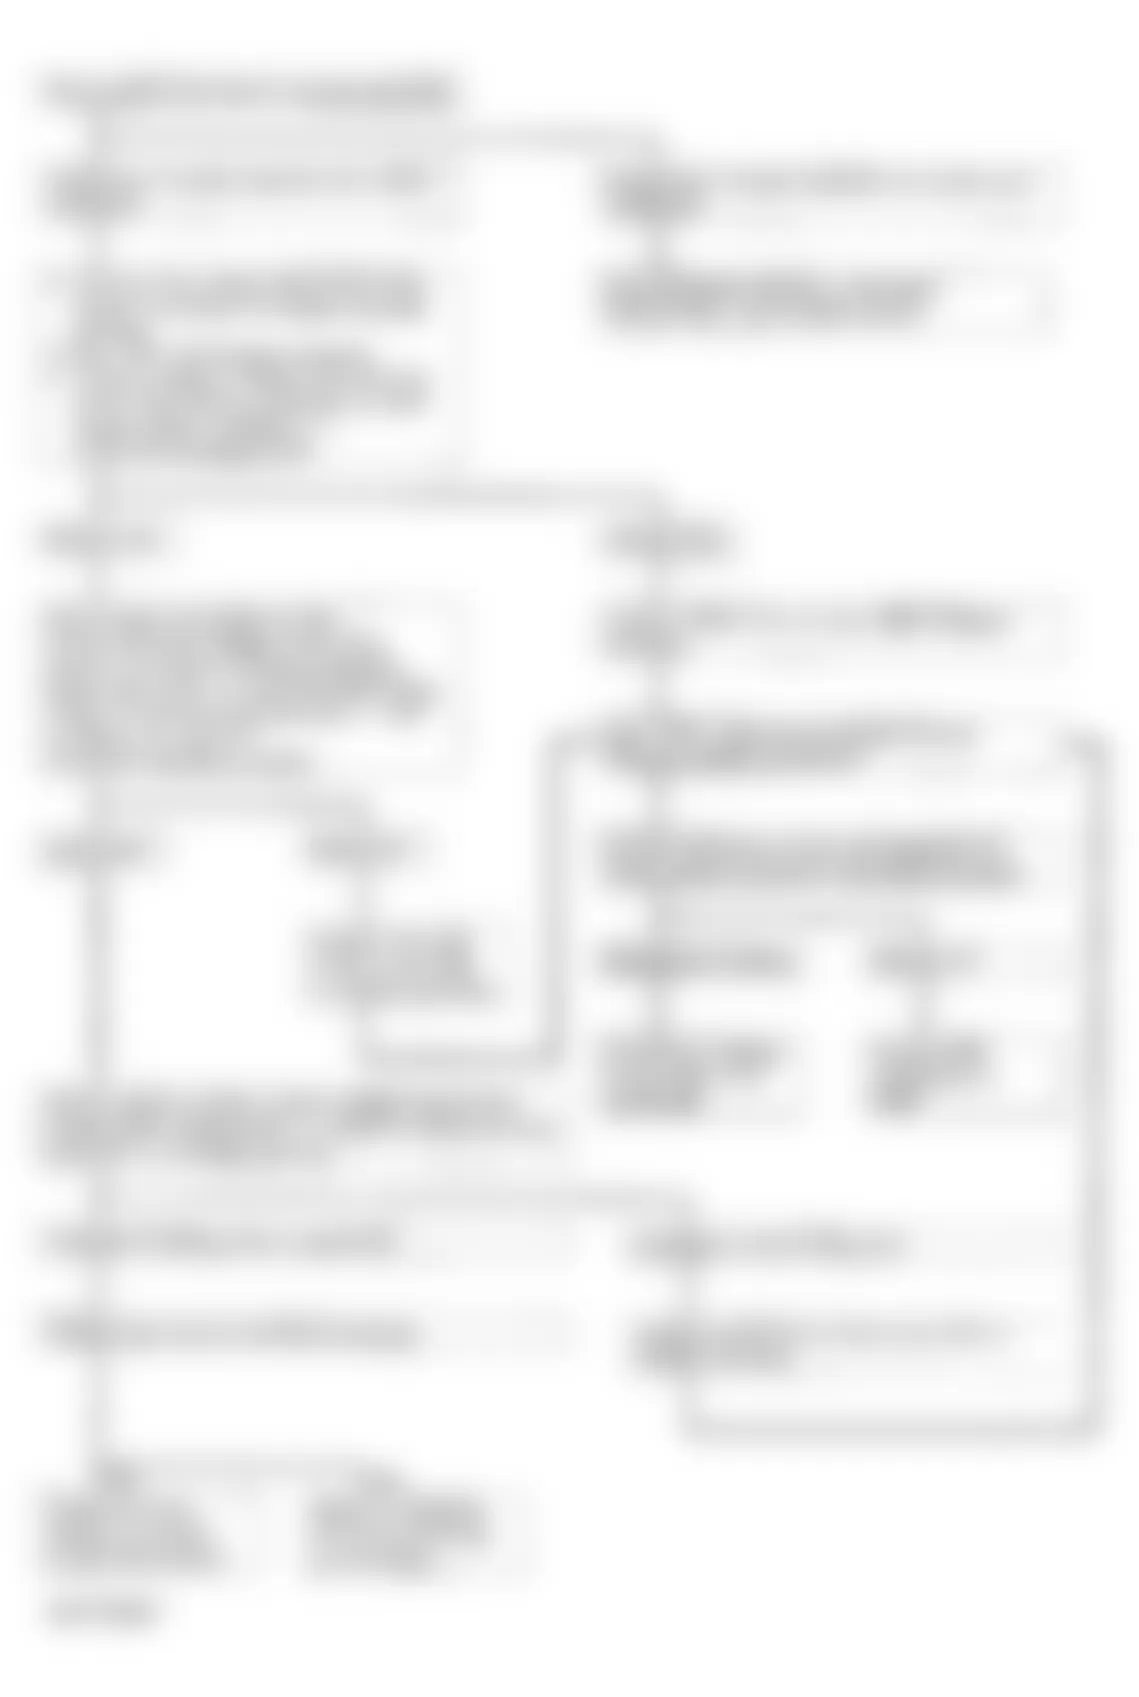 Isuzu Rodeo LS 1993 - Component Locations -  Code 61, 62 - Diagnostic Flowchart (2 Of 2) Courtesy Isuzu Motor Co